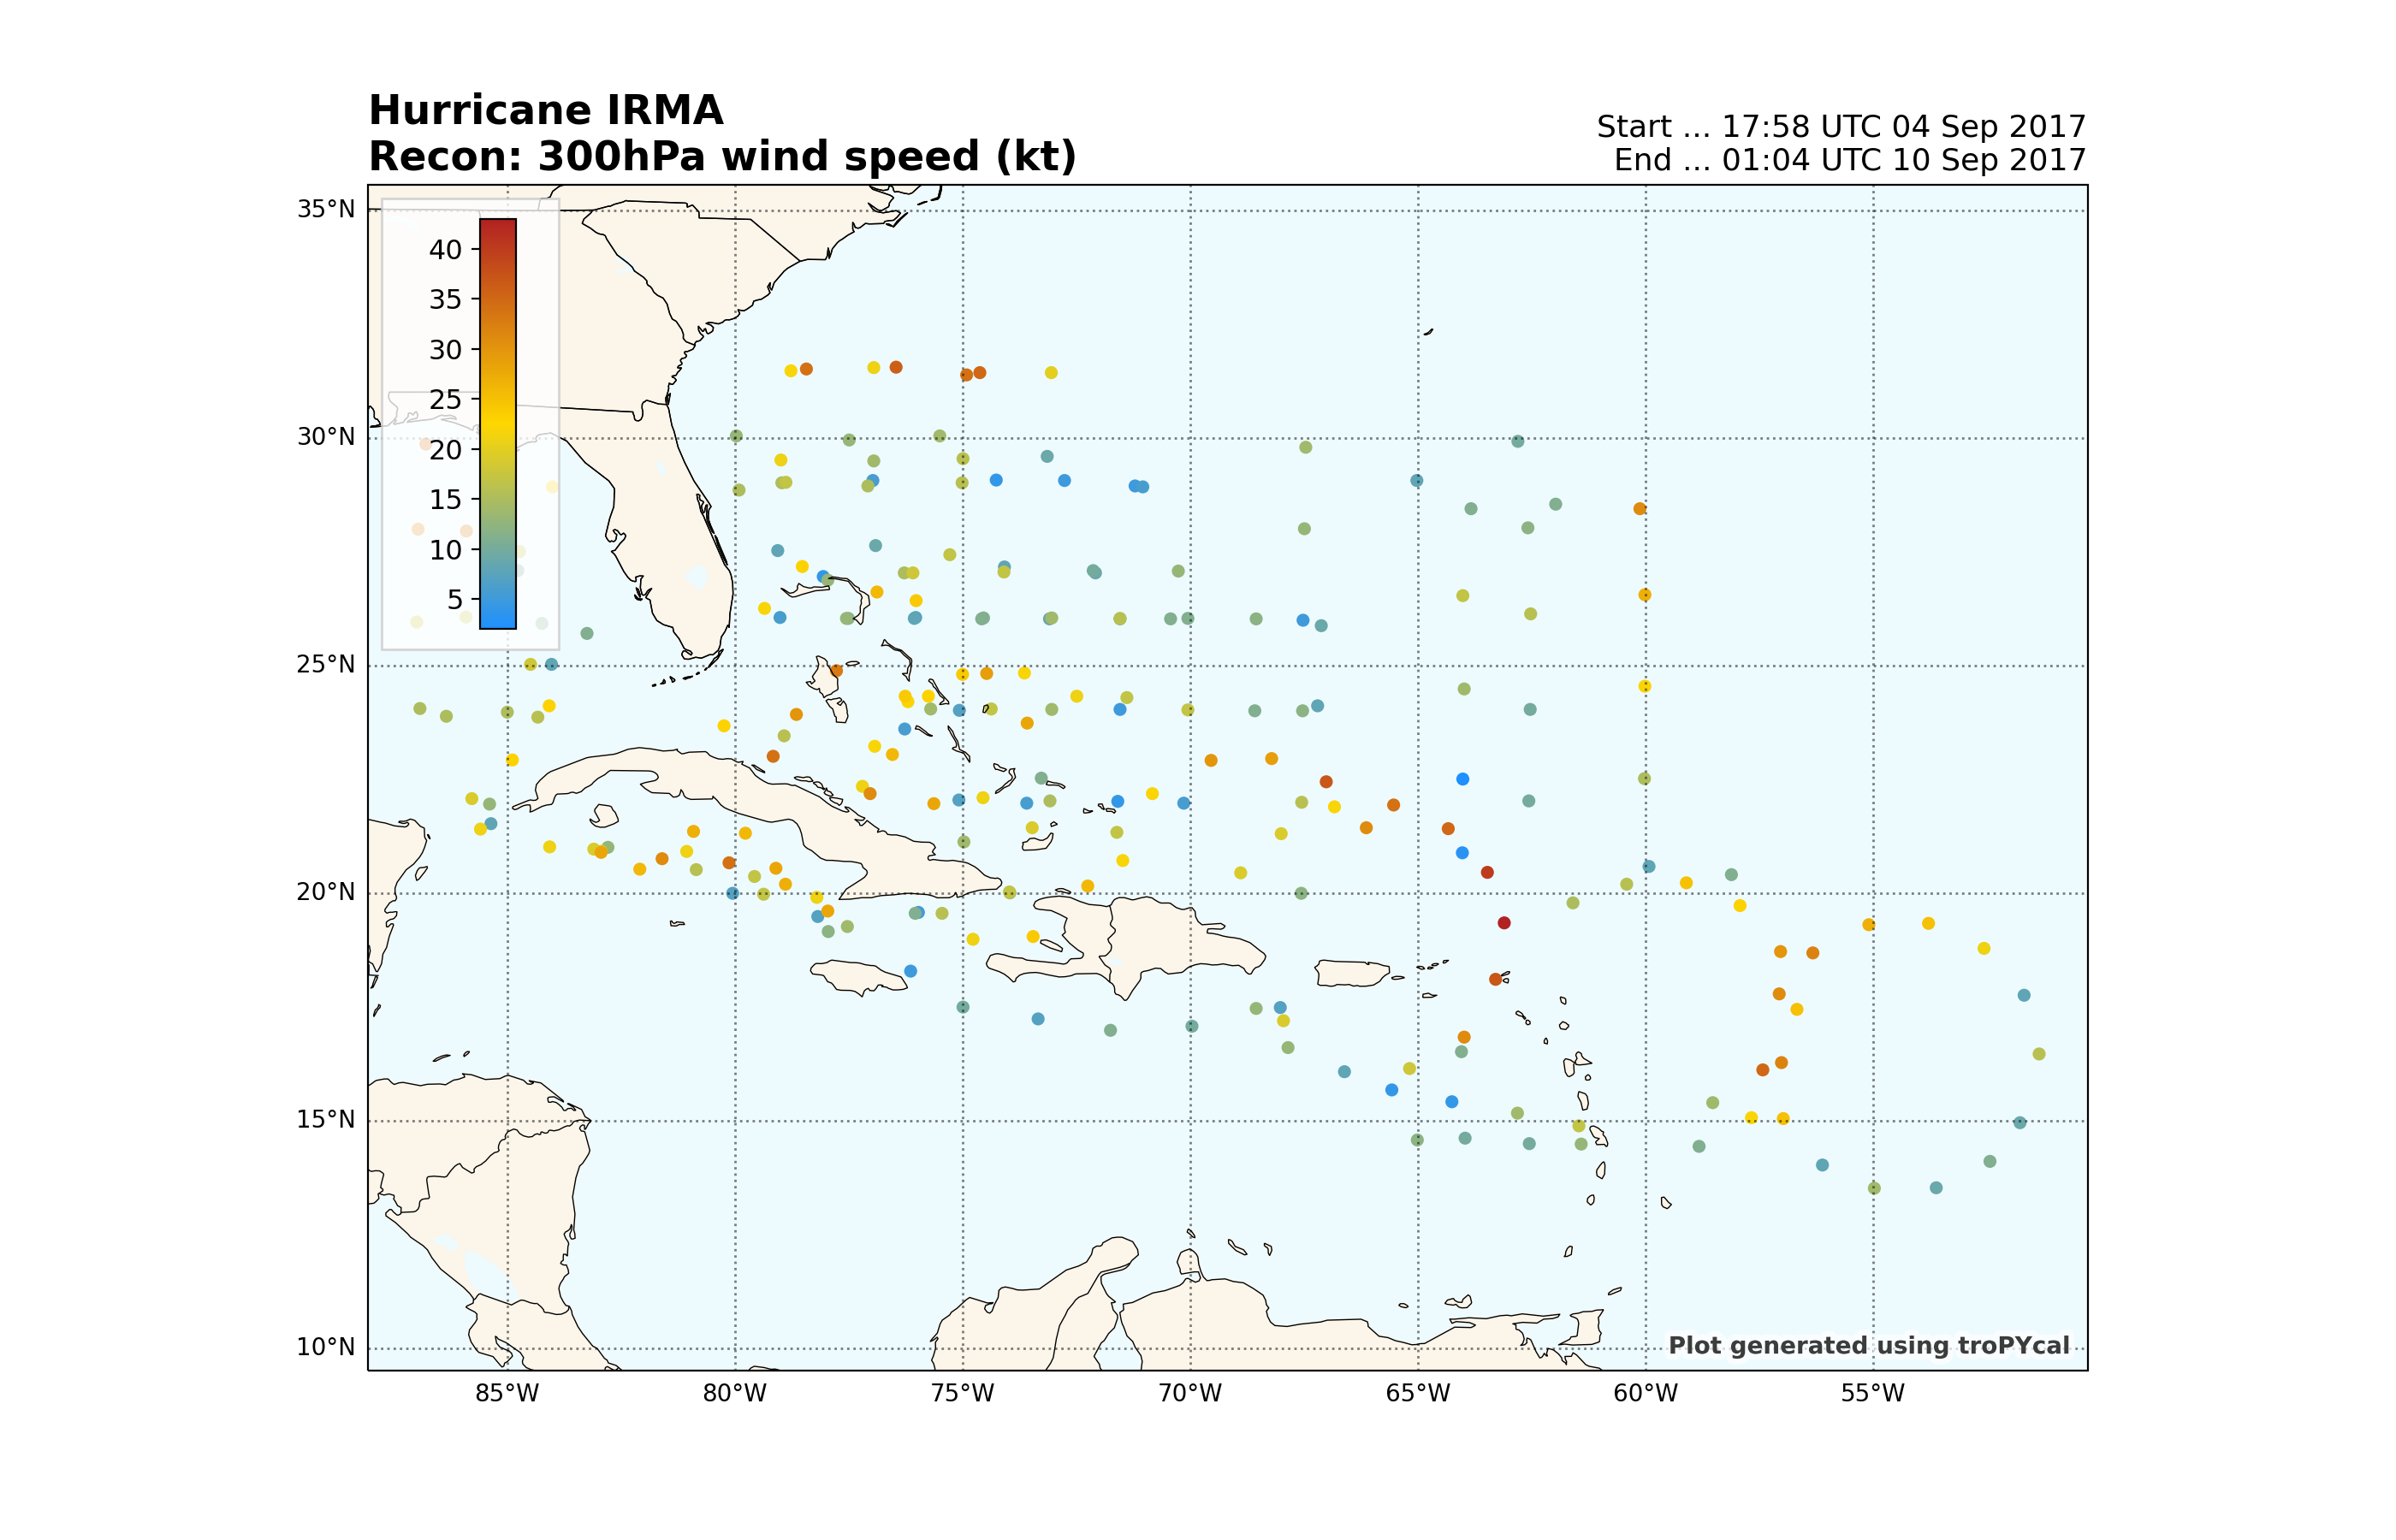 Hurricane IRMA Recon: 300hPa wind speed (kt), Start ... 17:58 UTC 04 Sep 2017 End ... 01:04 UTC 10 Sep 2017